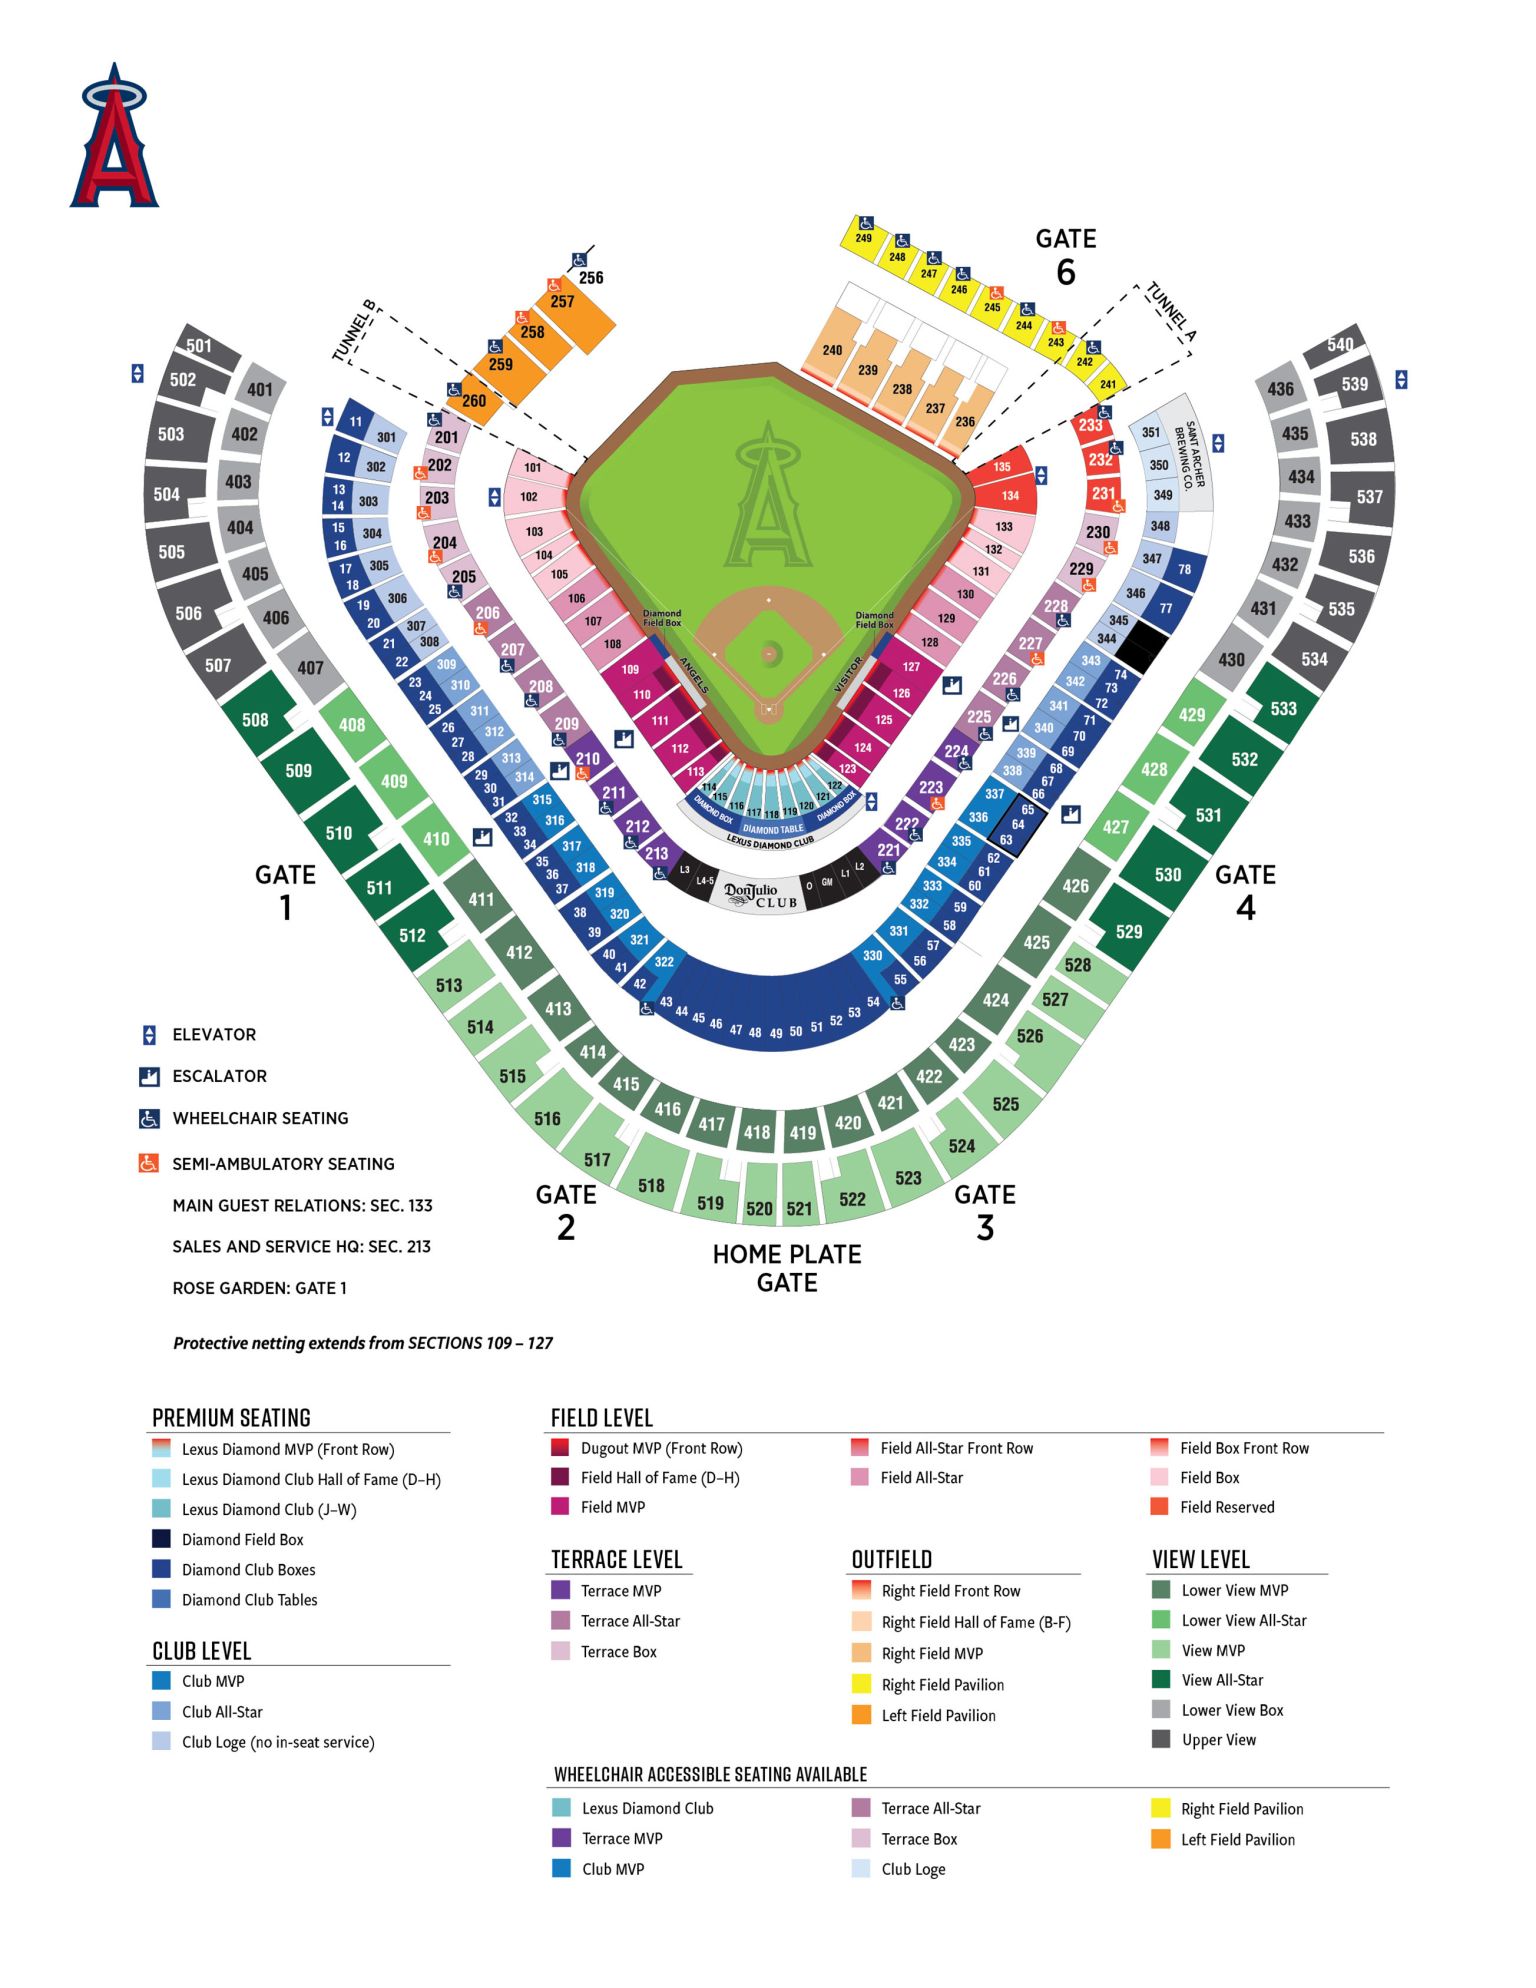 Angels Stadium Seating Chart View Tutorial Pics